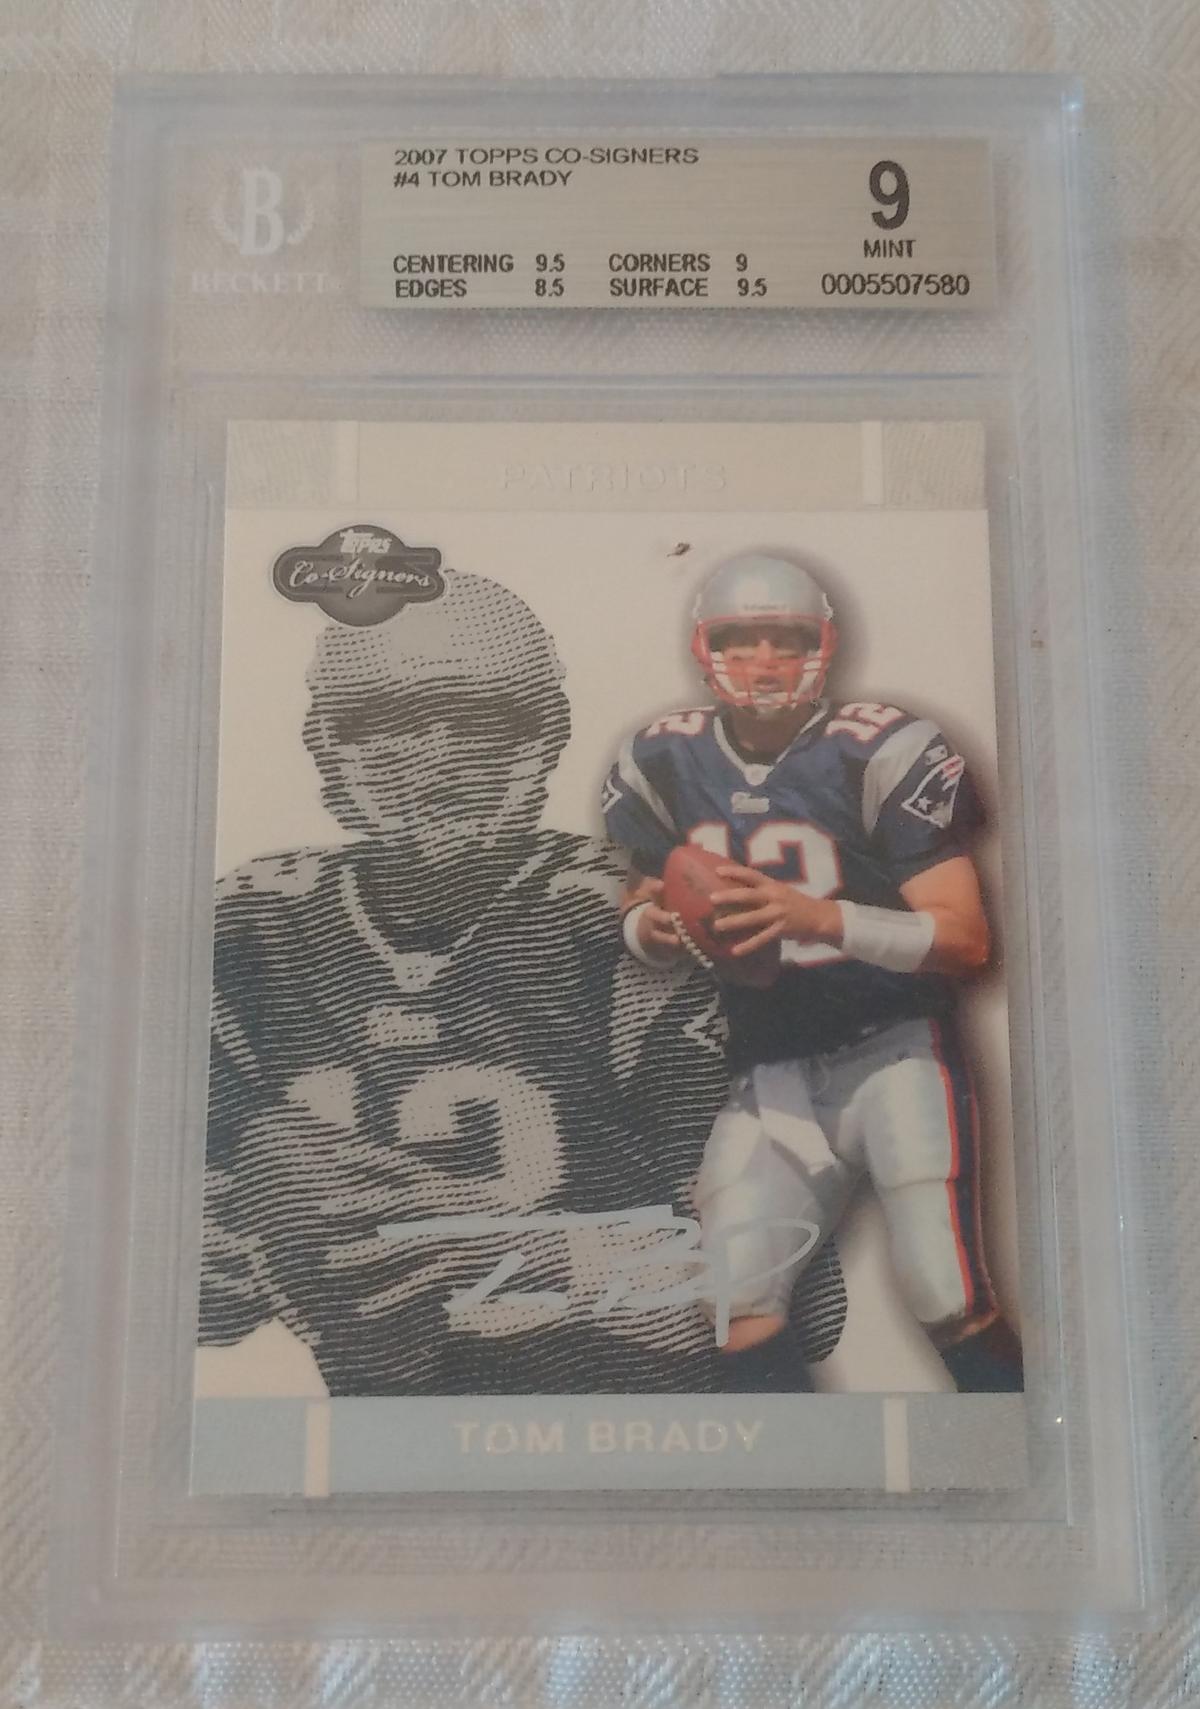 2007 Topps Co-Signors #4 Tom Brady NFL Football Card Patriots BGS GRADED 9 MINT